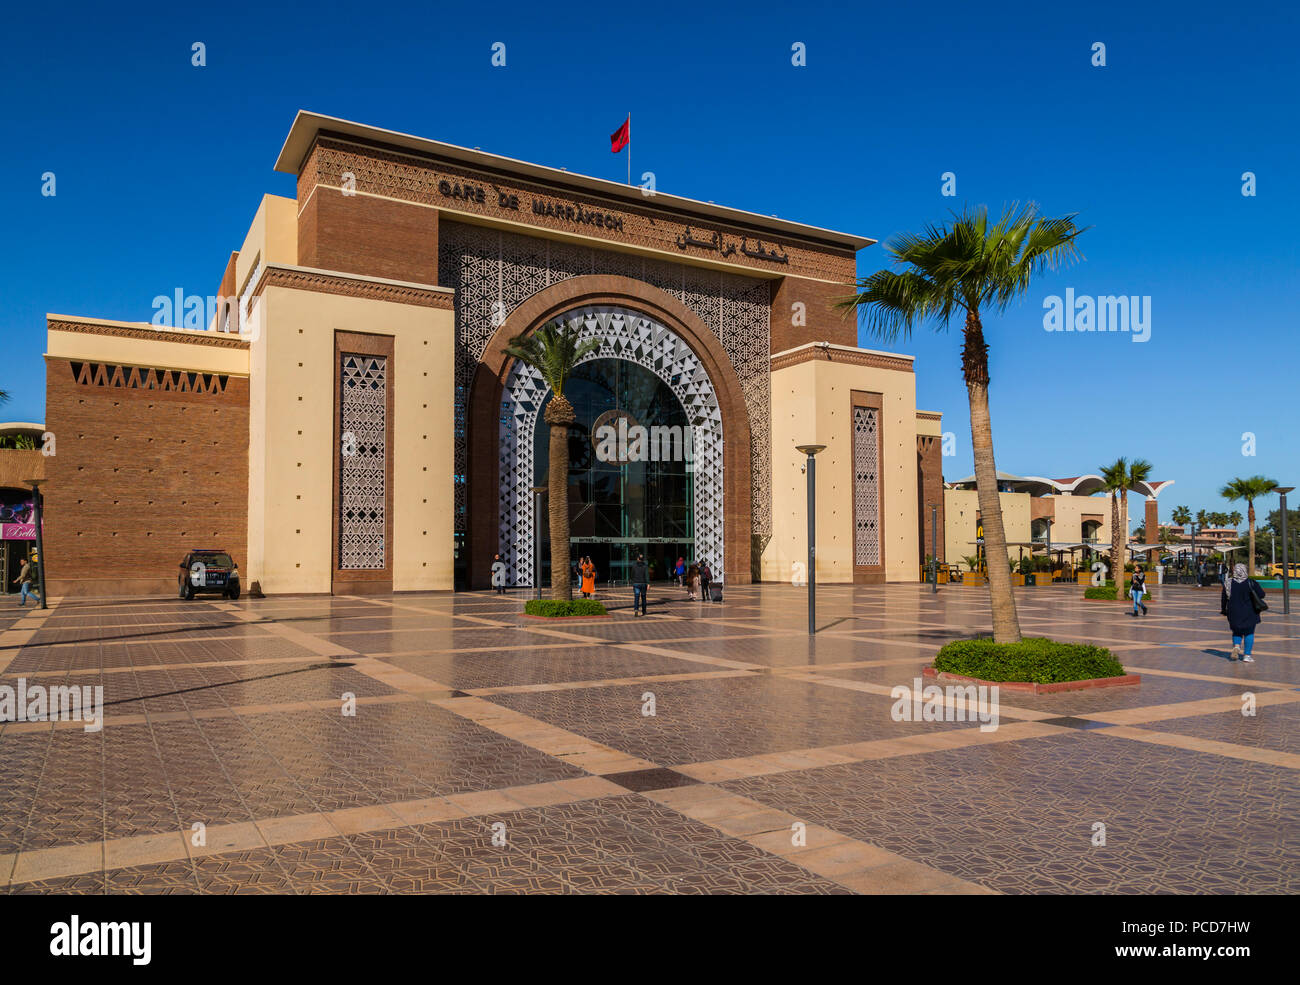 Blick auf Bahn und Bus Station (Gare Bahnhof Oncfon) Avenue Mohamed VI, Marrakech, Marokko, Nordafrika, Afrika Stockfoto